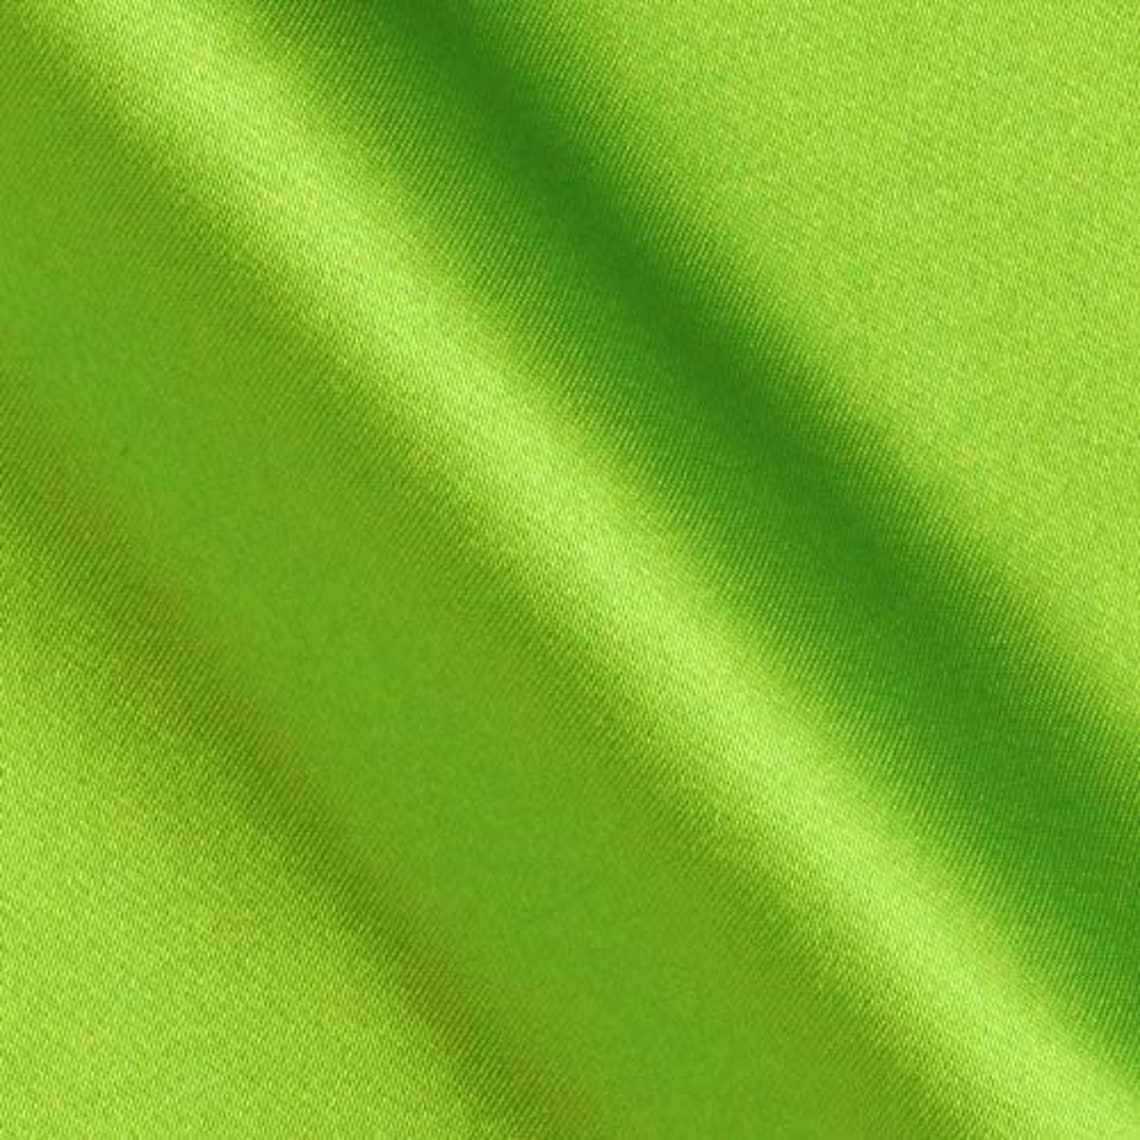 Lime Green Heavy Shiny Bridal Satin Fabric for Wedding Dress | Etsy